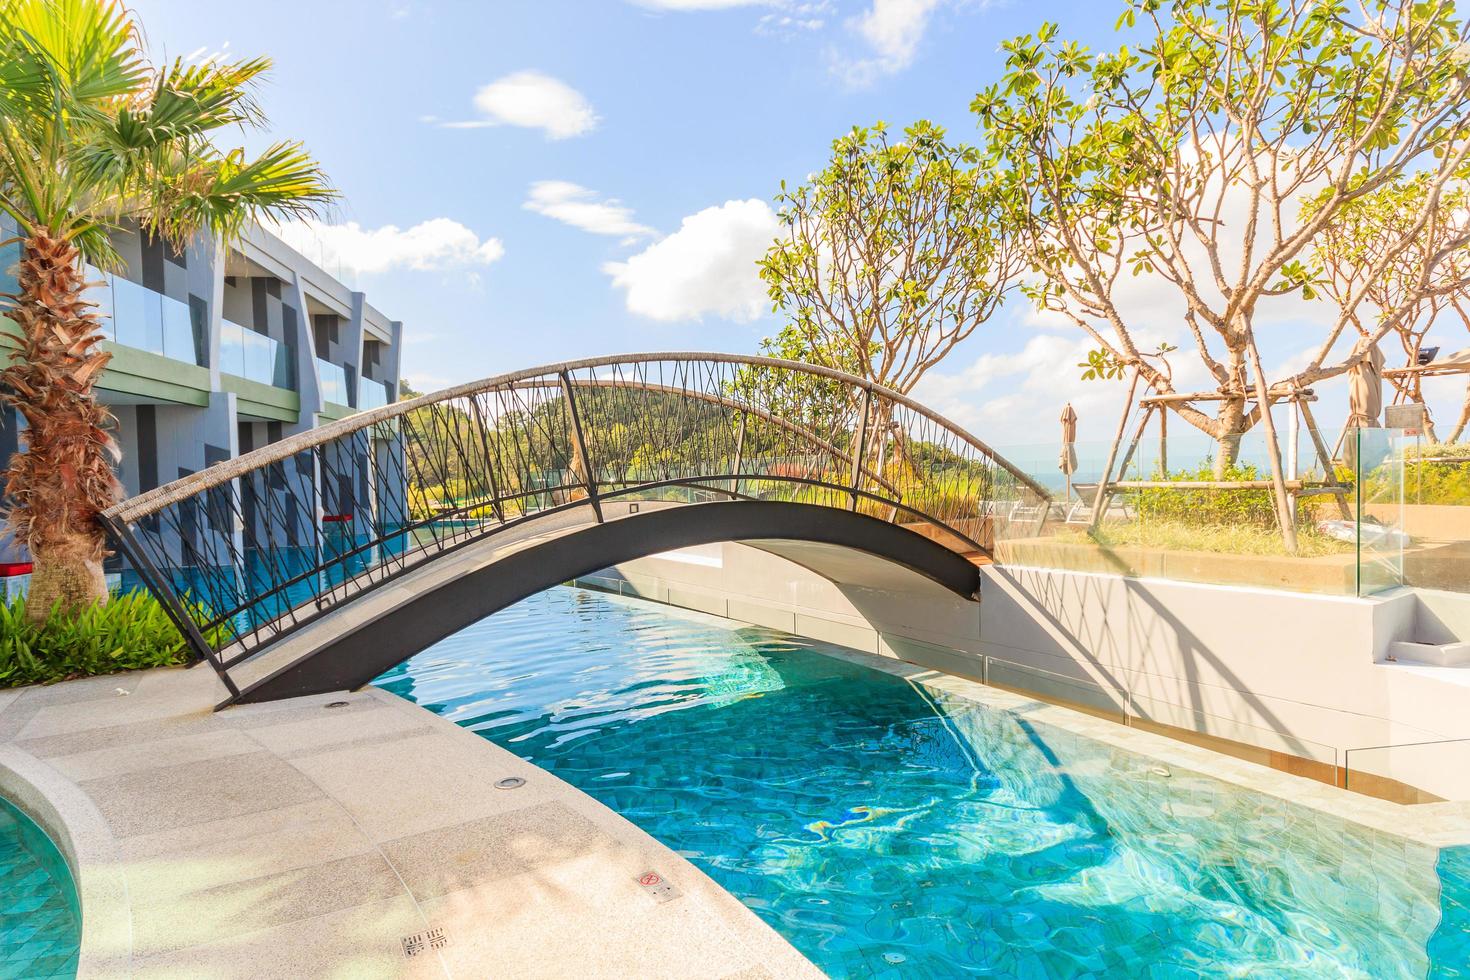 Swimming pool at Crest Resort and Pool Villas and Resorts, Phuket, Thailand, 2017 photo